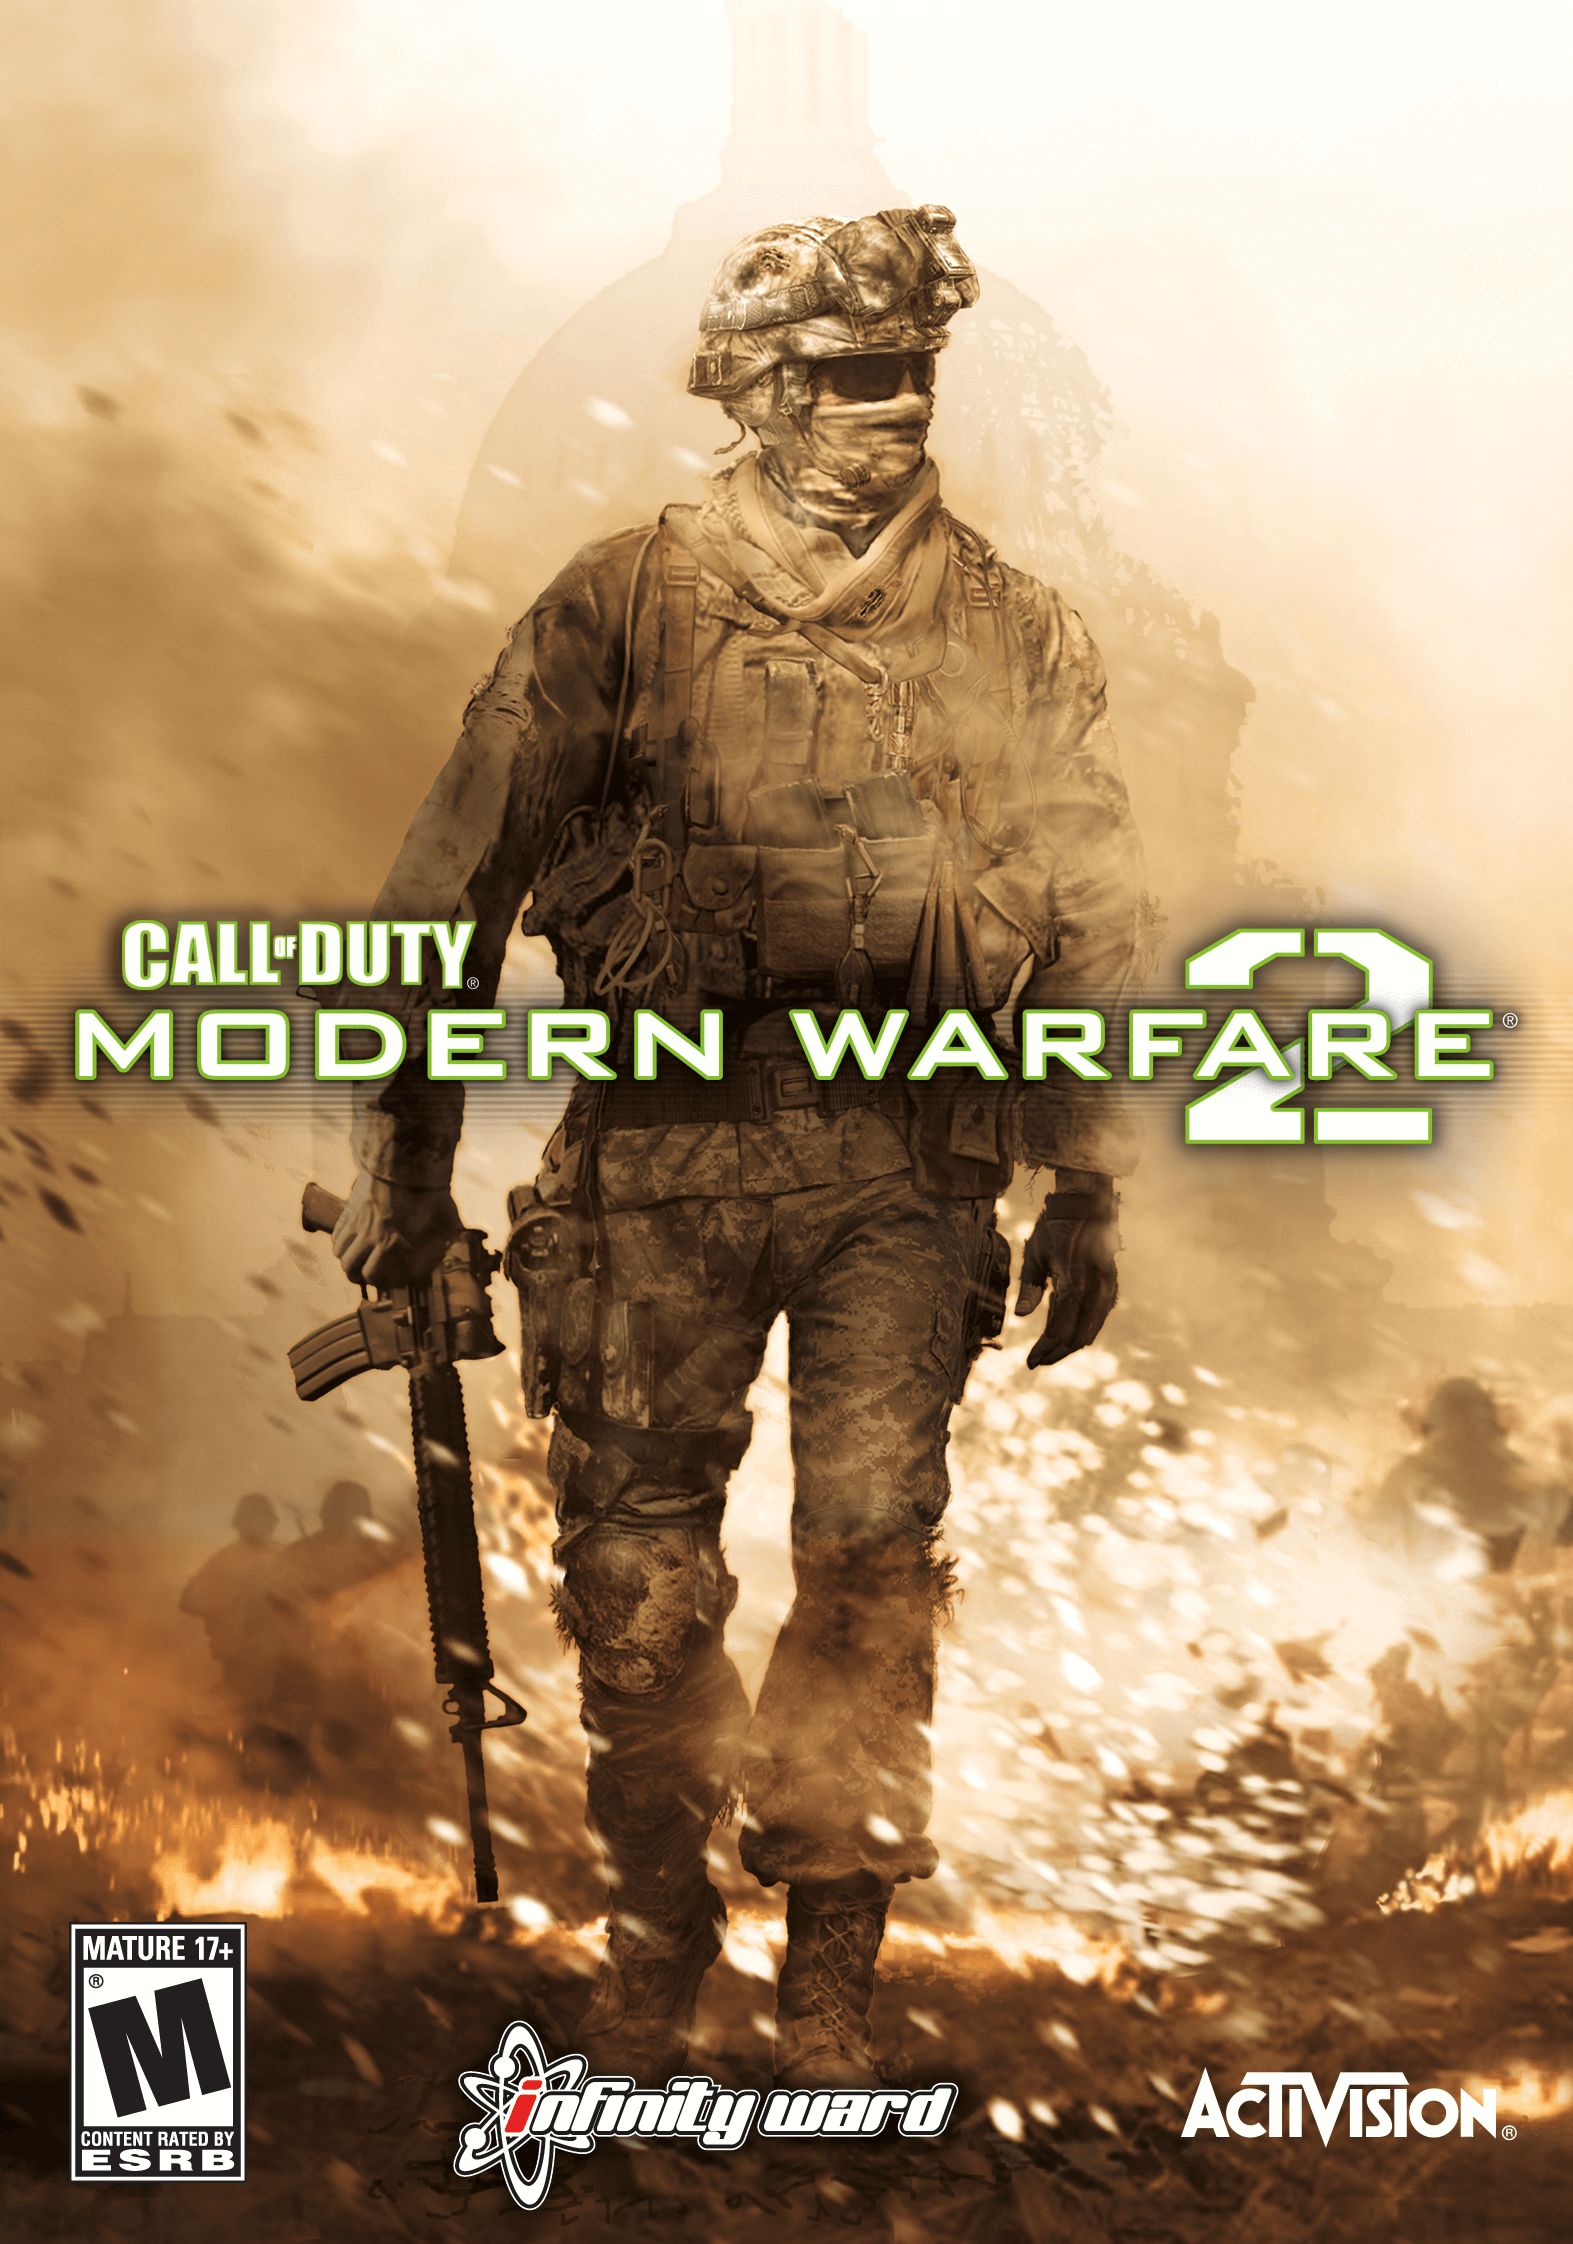 Free Download Call of Duty modern Warfare 2 Update, Crack, Patch